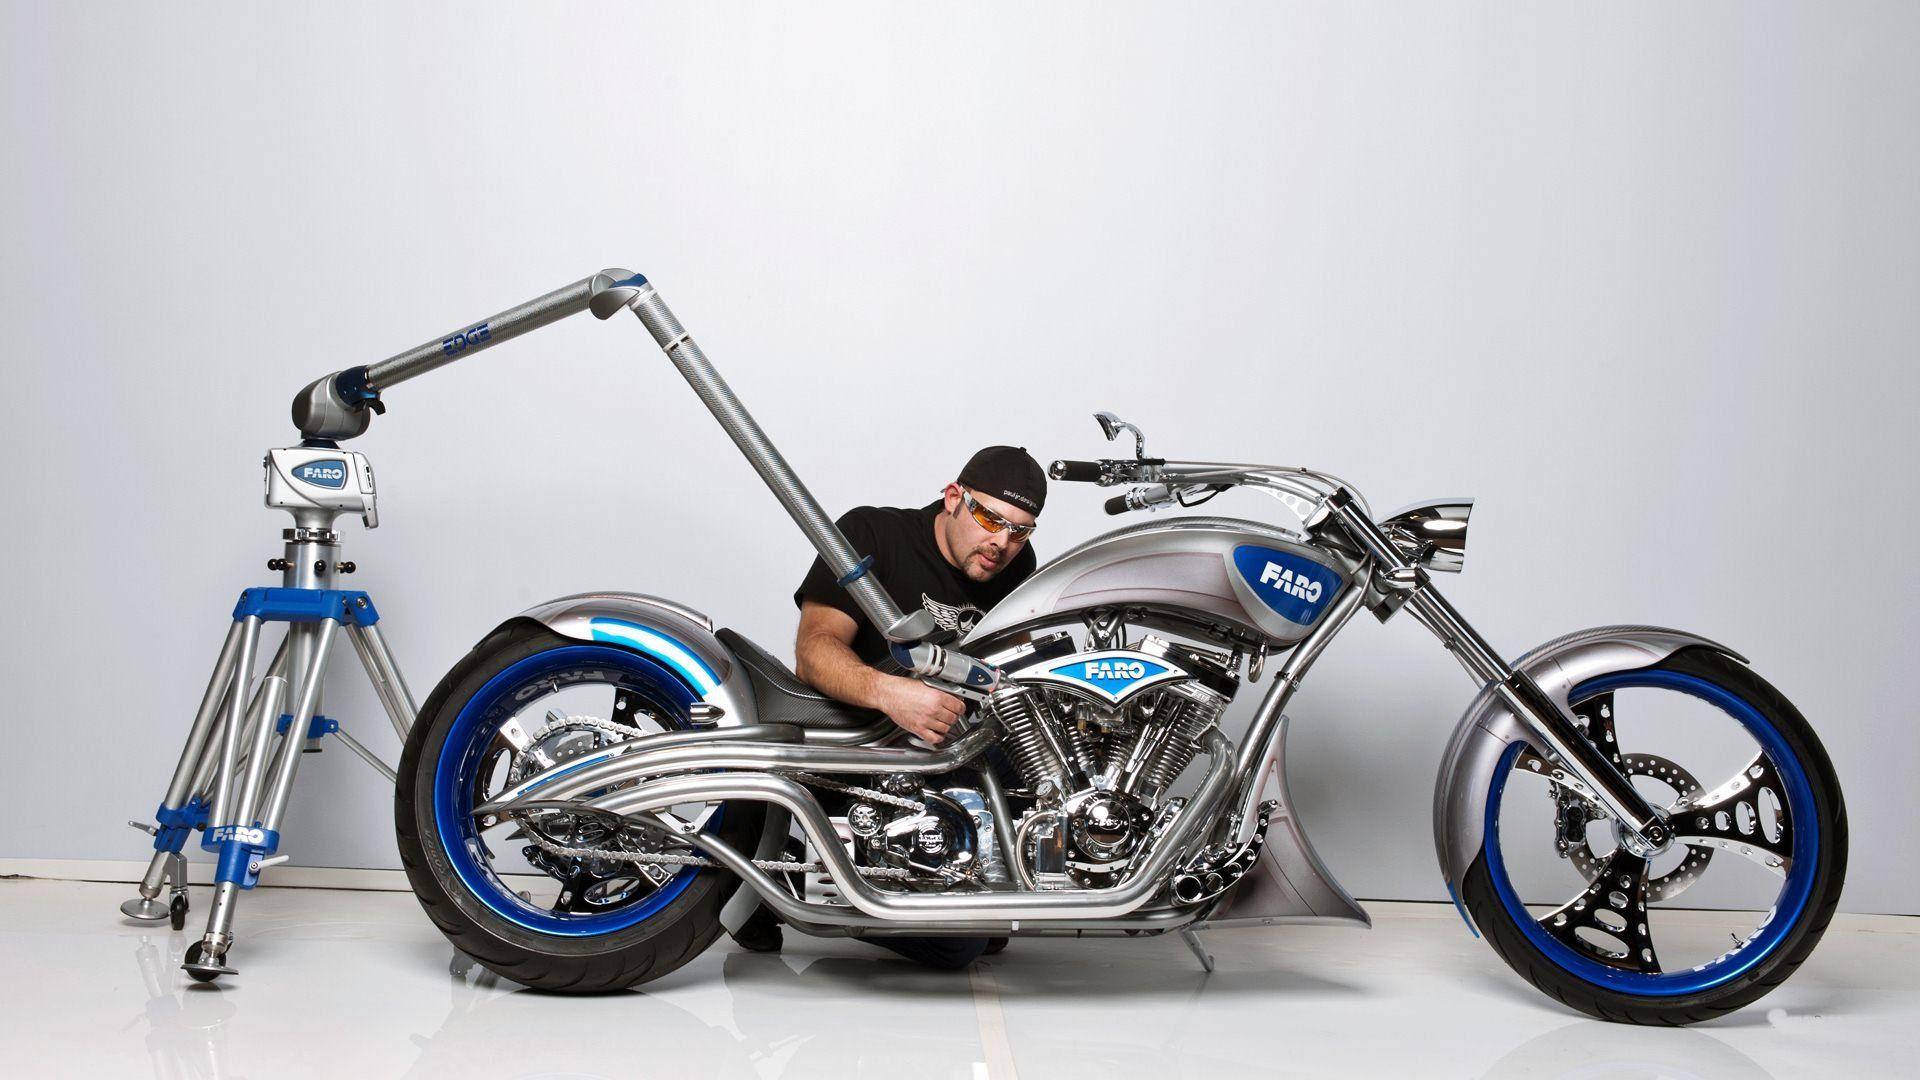 Chopper bike tuning motorbike motorcycle hot rod rods custom